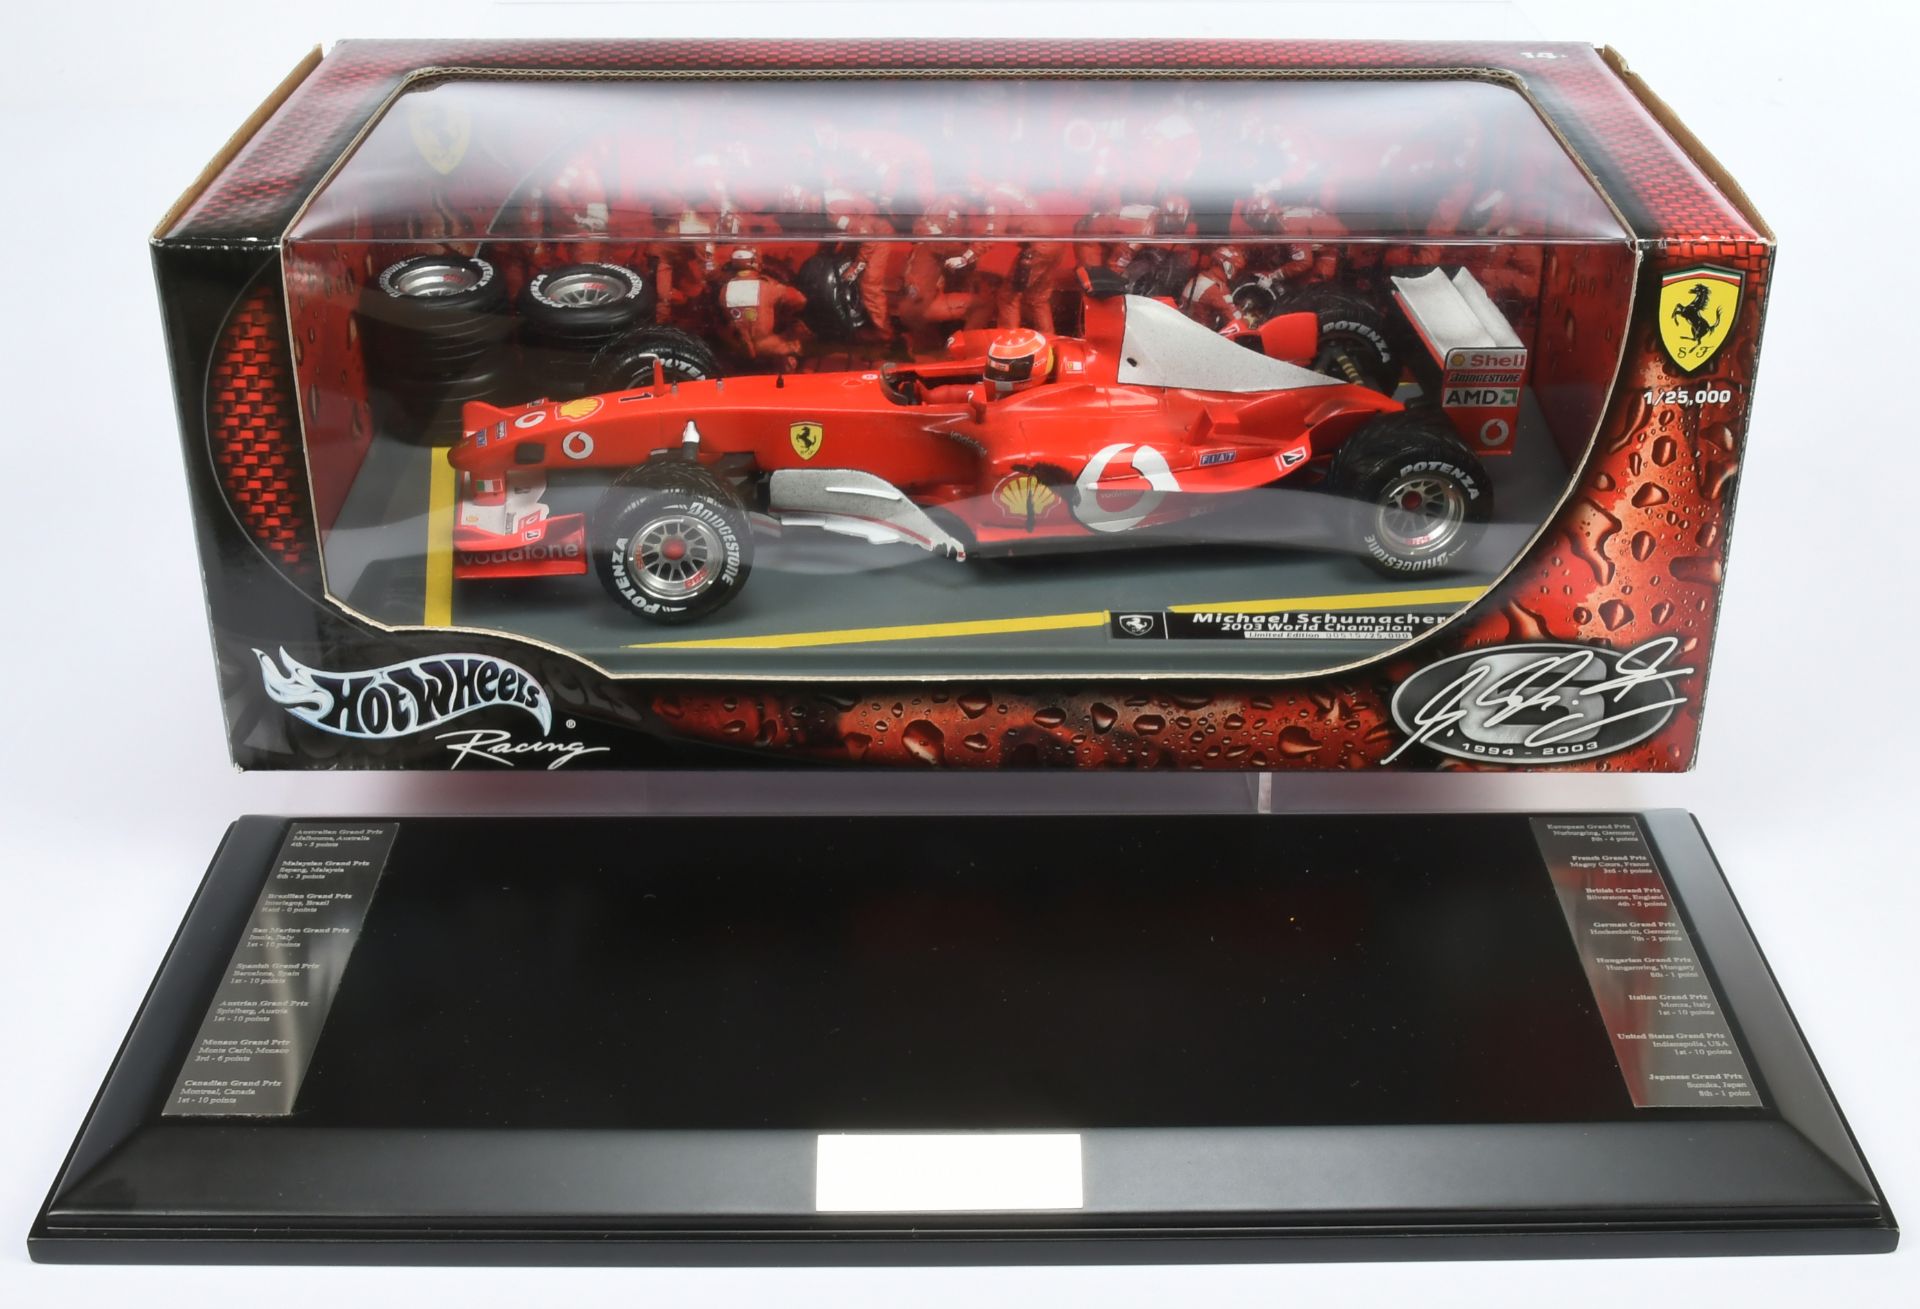 Hot Wheels 1/18th scale B1026 Ferrari M. Schumacher 2003 World Champion, also includes F 2003 Wor...